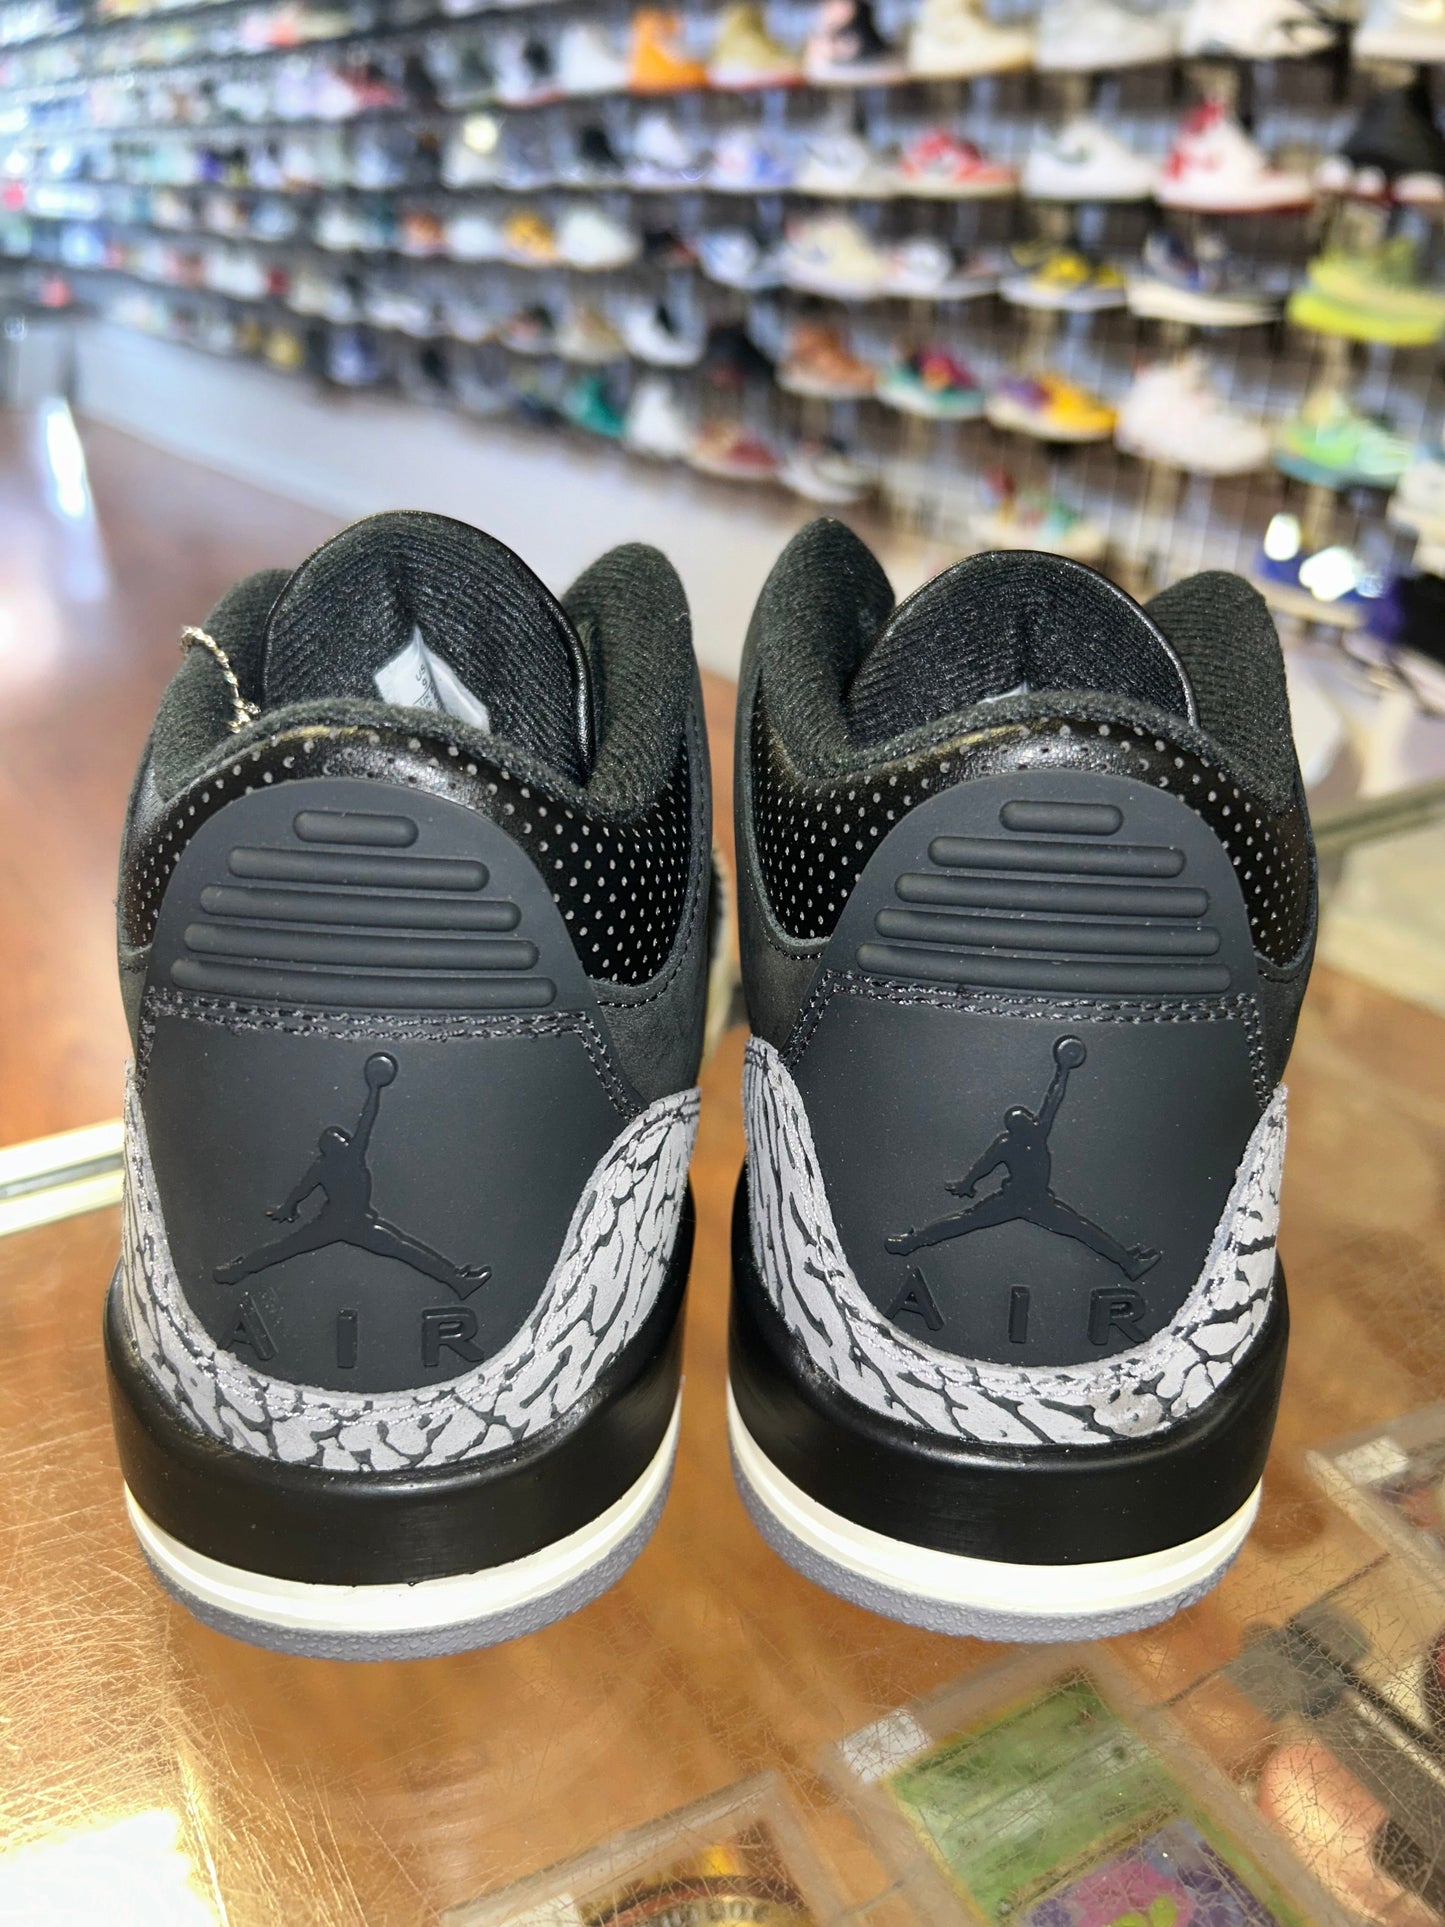 Size 4 (5.5W) Air Jordan 3 “Off Noir” Brand New (MAMO)